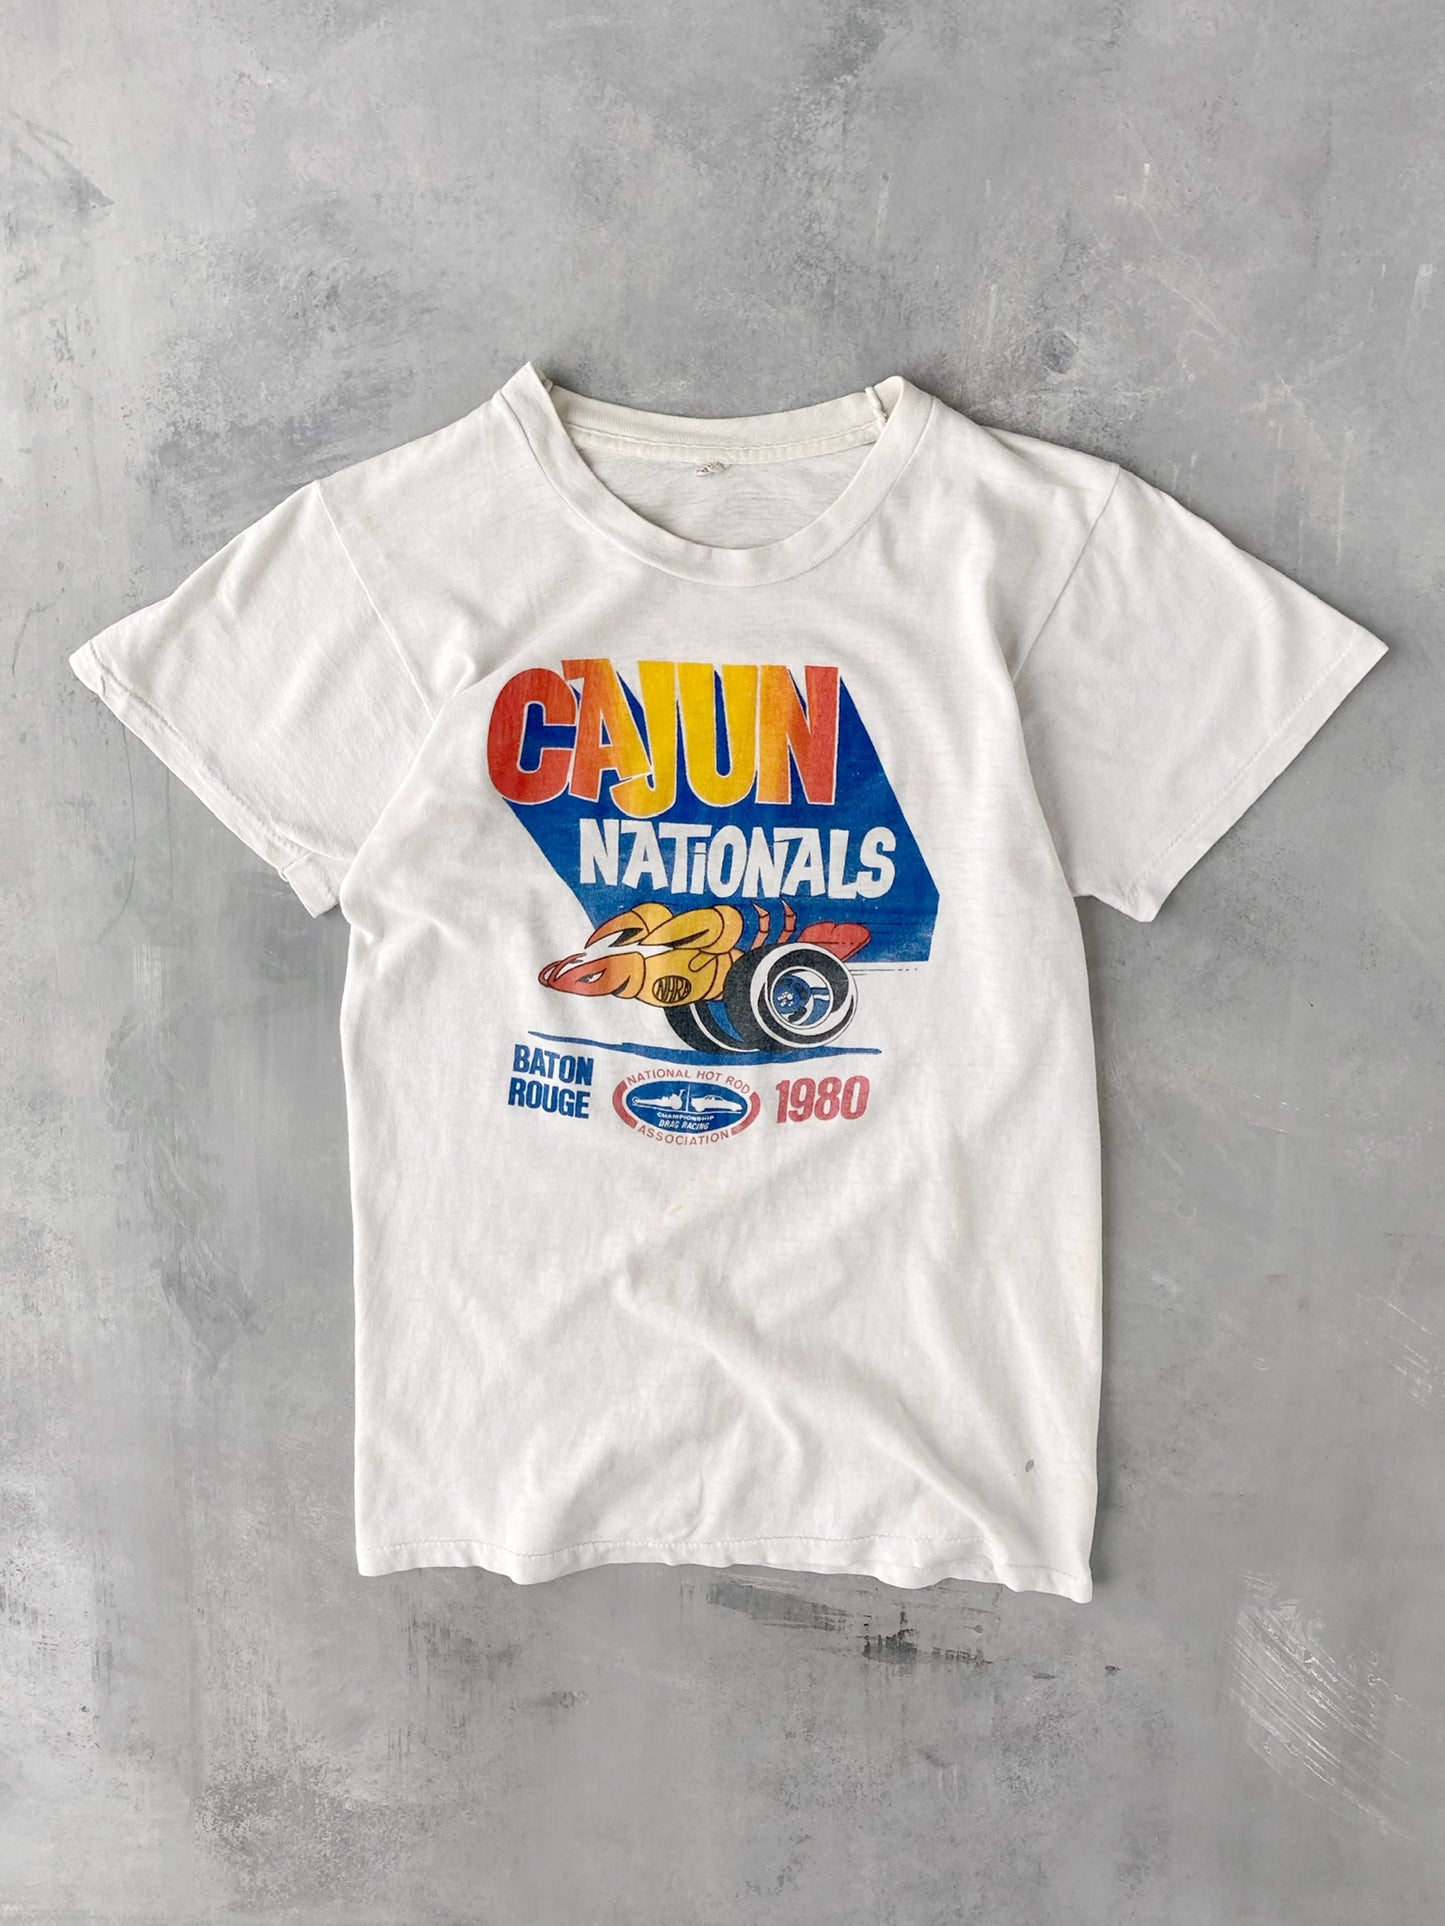 Summernationals Racing T-Shirt '80 - Small